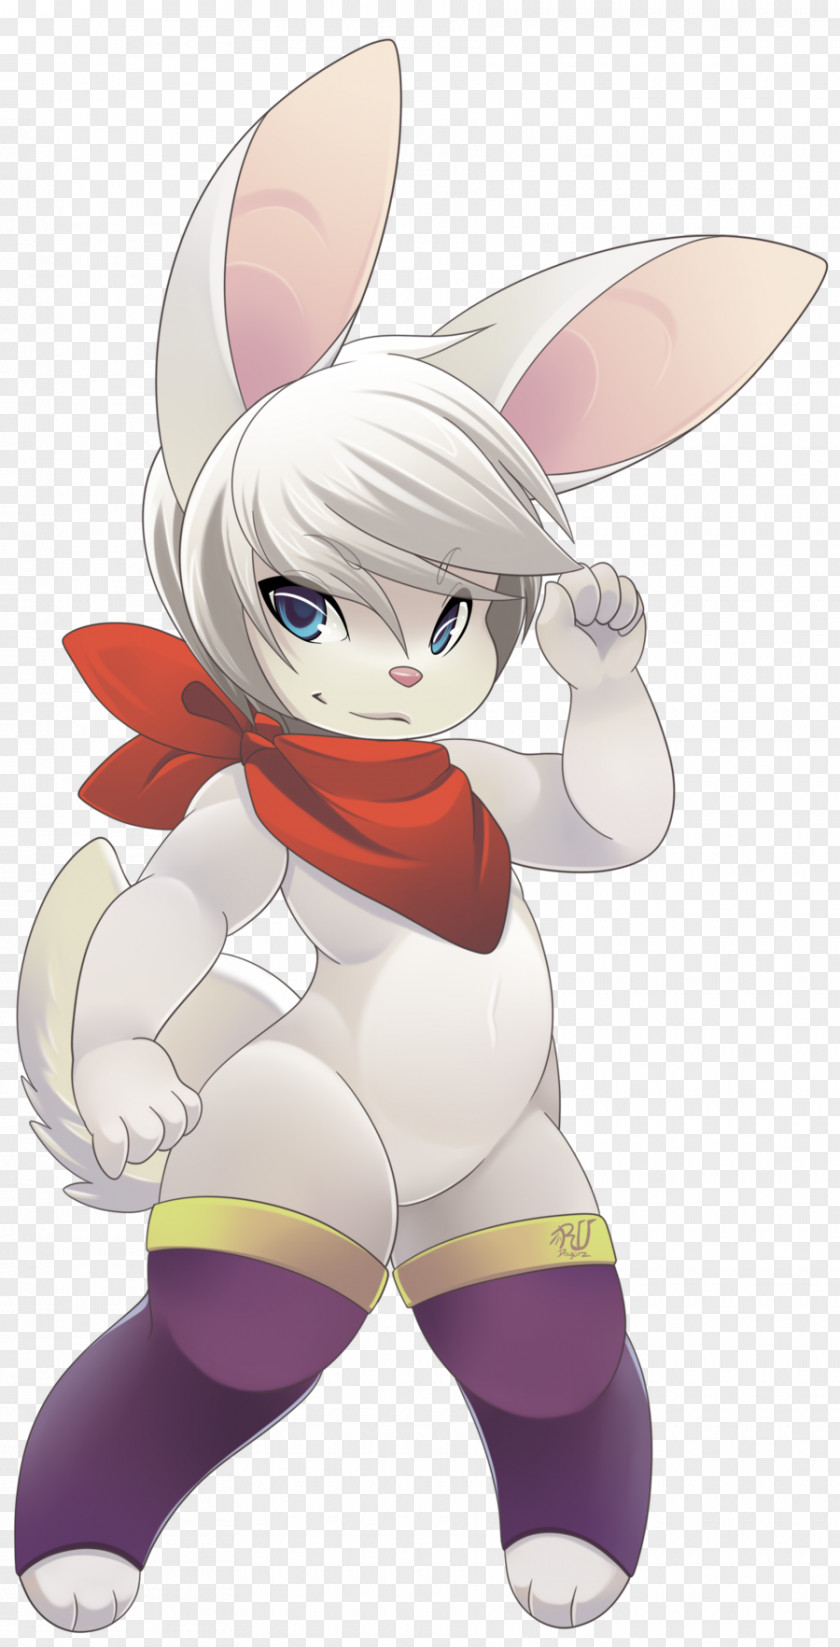 Tofu Easter Bunny Hare Rabbit Vertebrate PNG